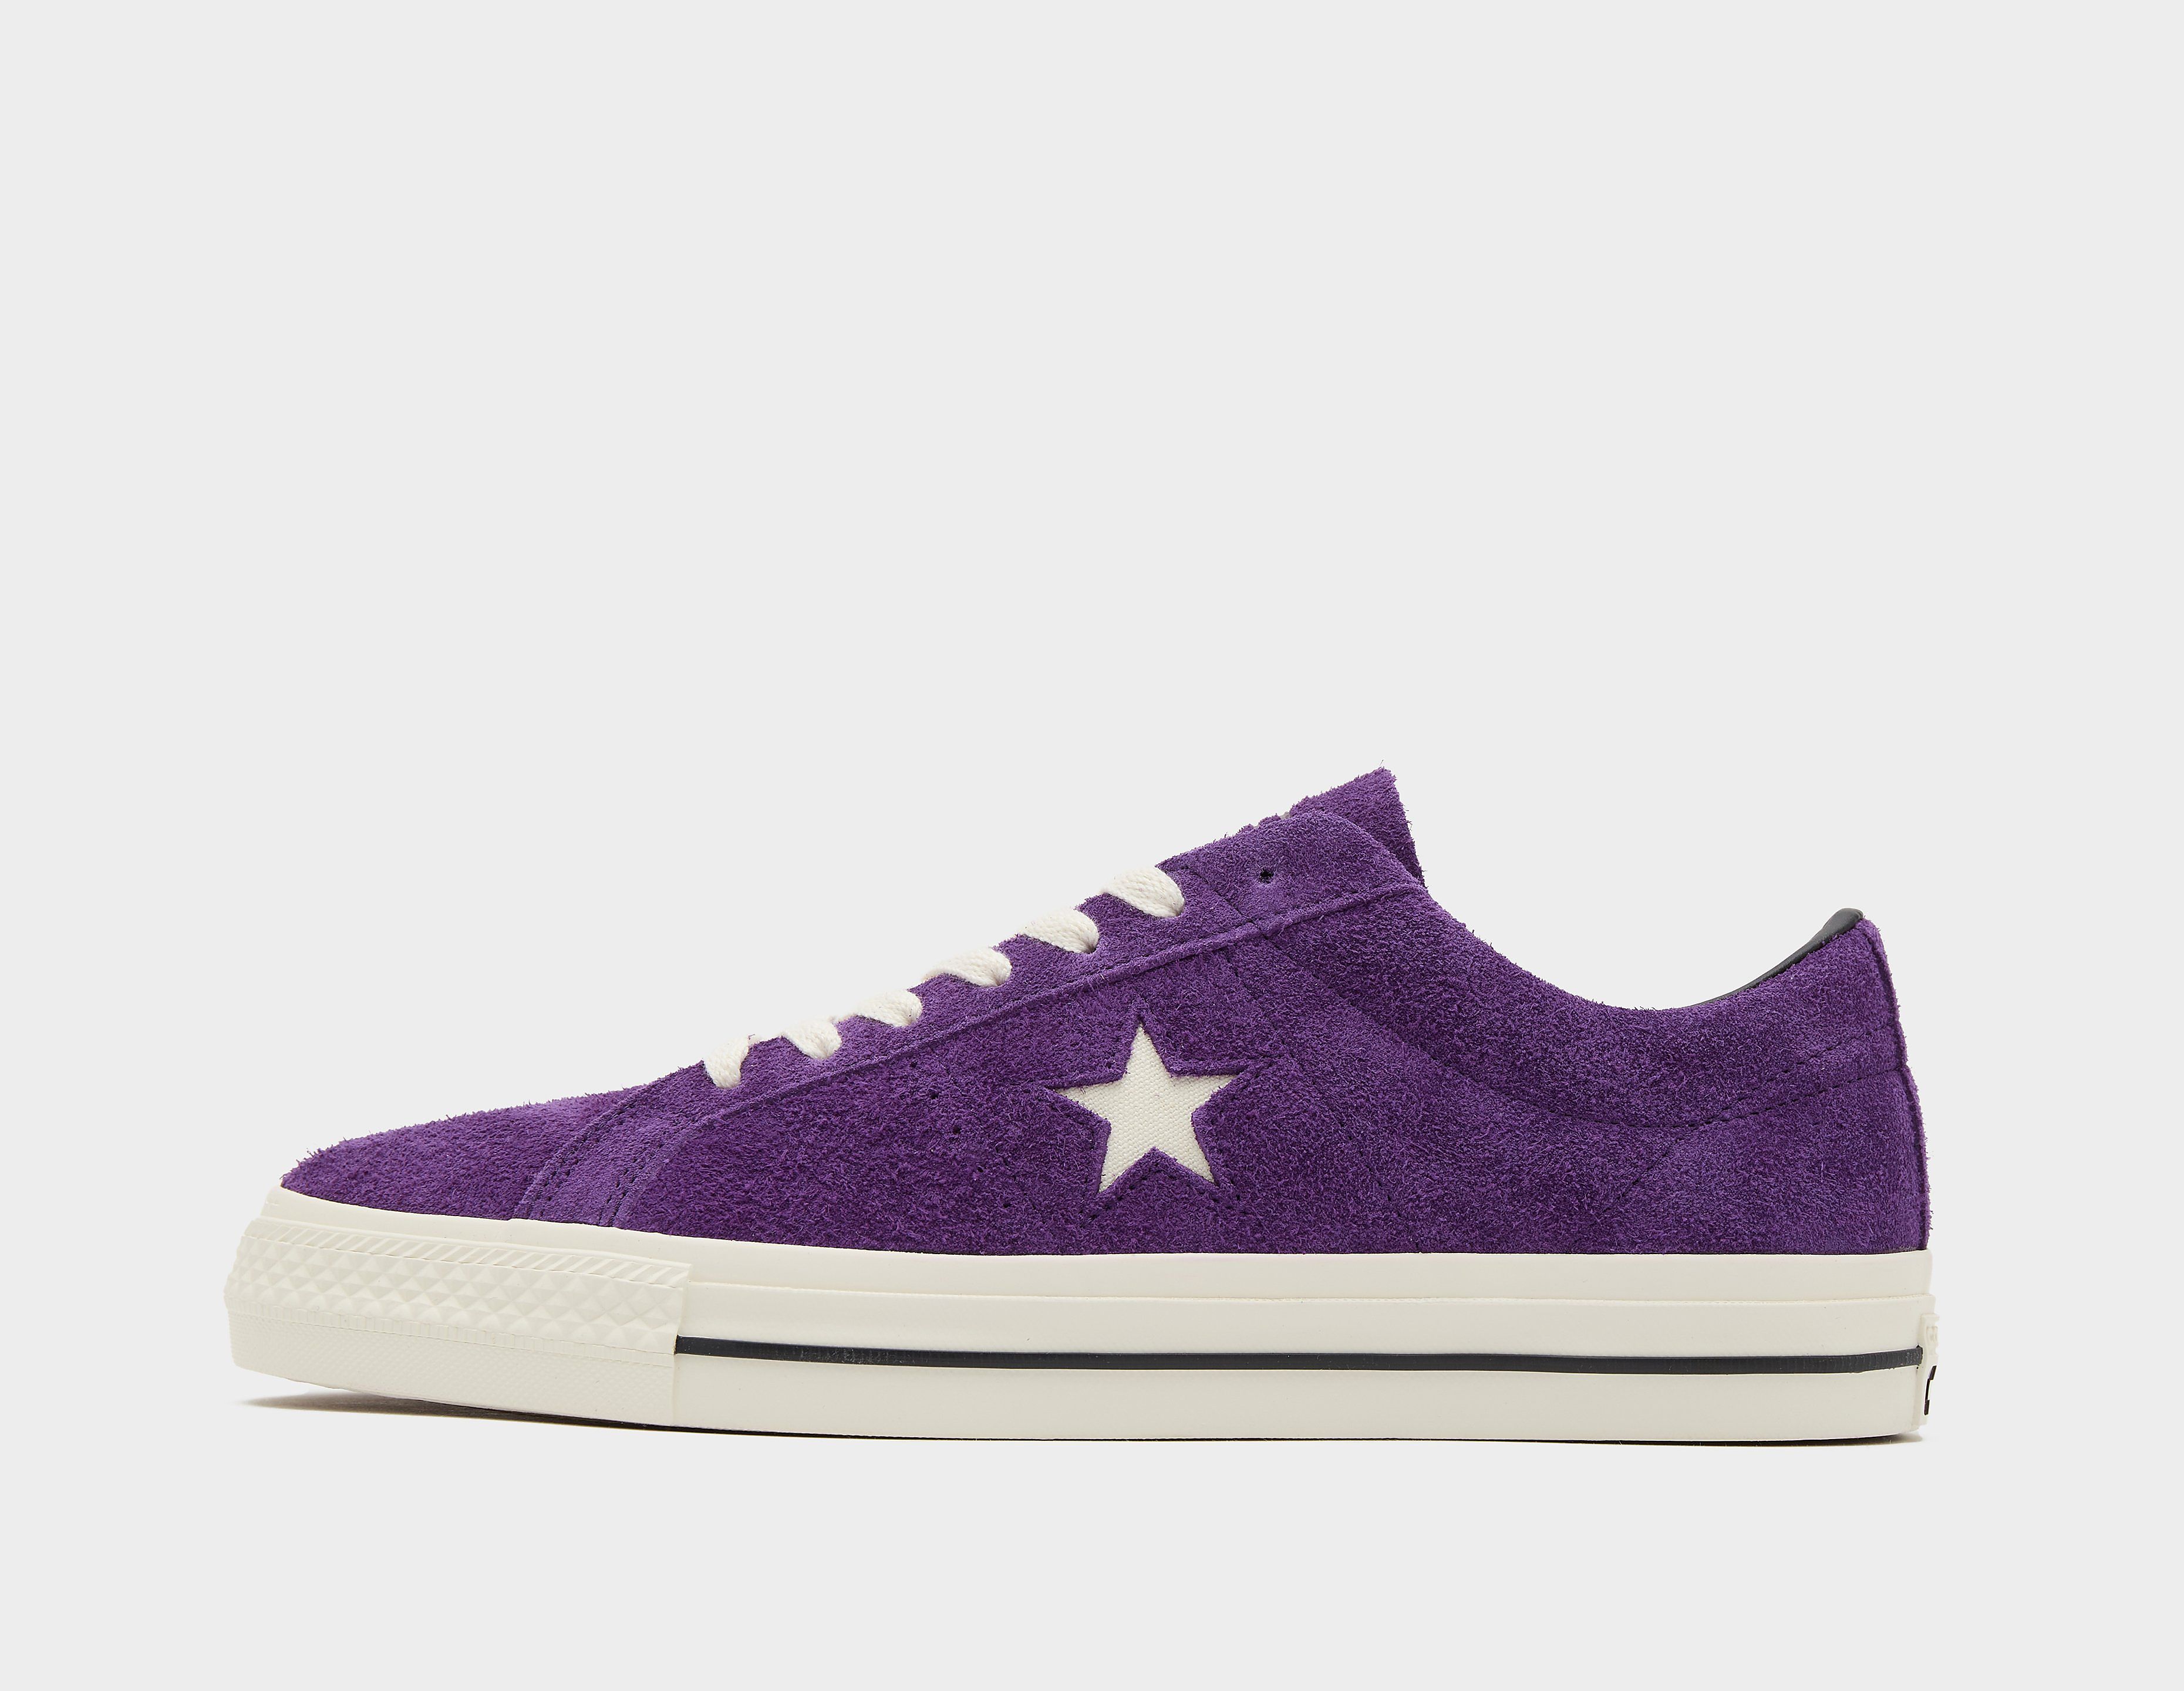 Converse One Star Pro Femme, Purple